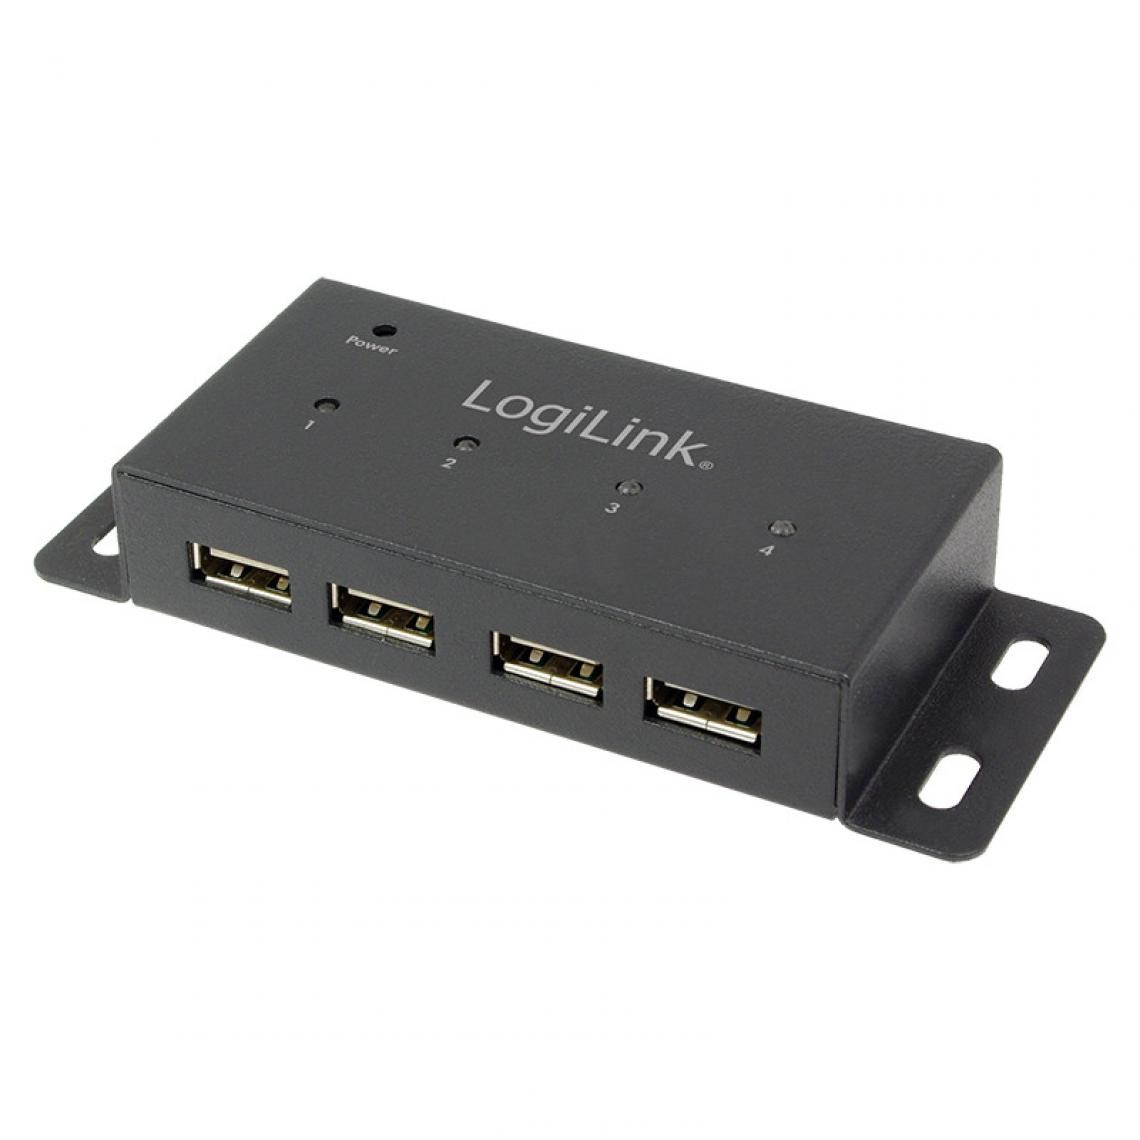 Logilink - LogiLink Hub USB 2.0, 4 ports, pour un montage mural () - Hub